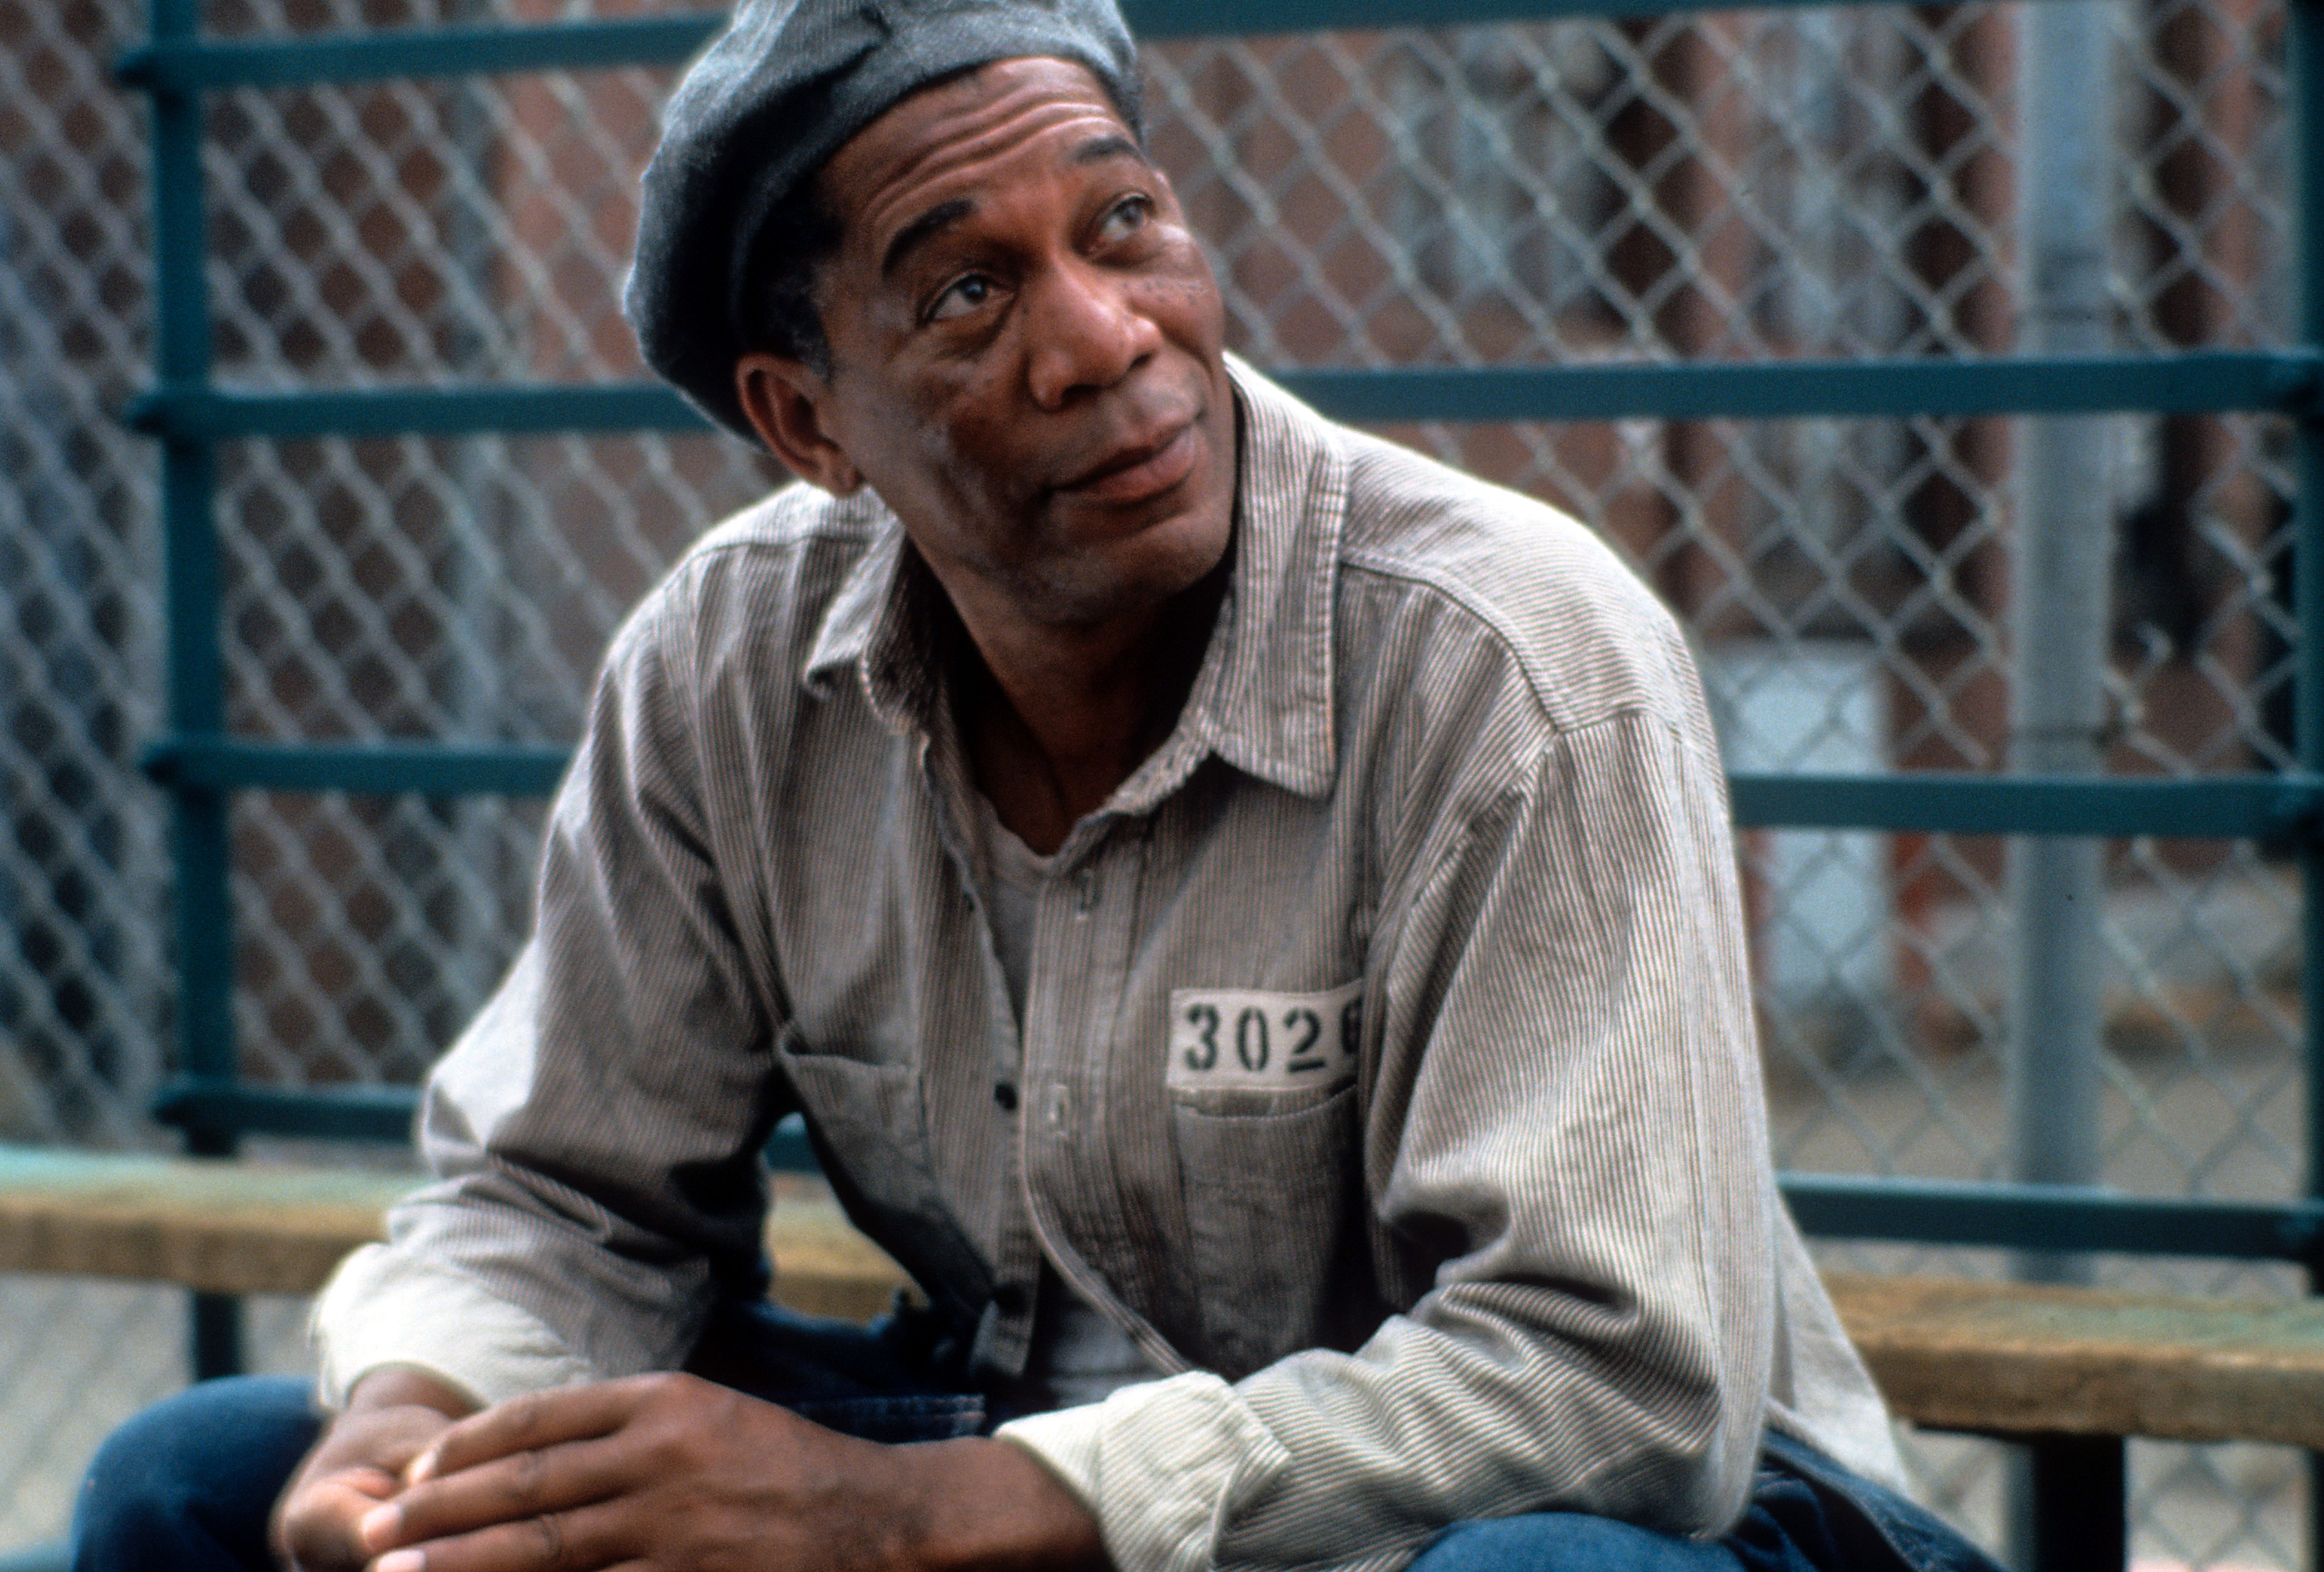 Morgan Freeman dans "The Shawshank Redemption" en 1994 | Source : Getty Images